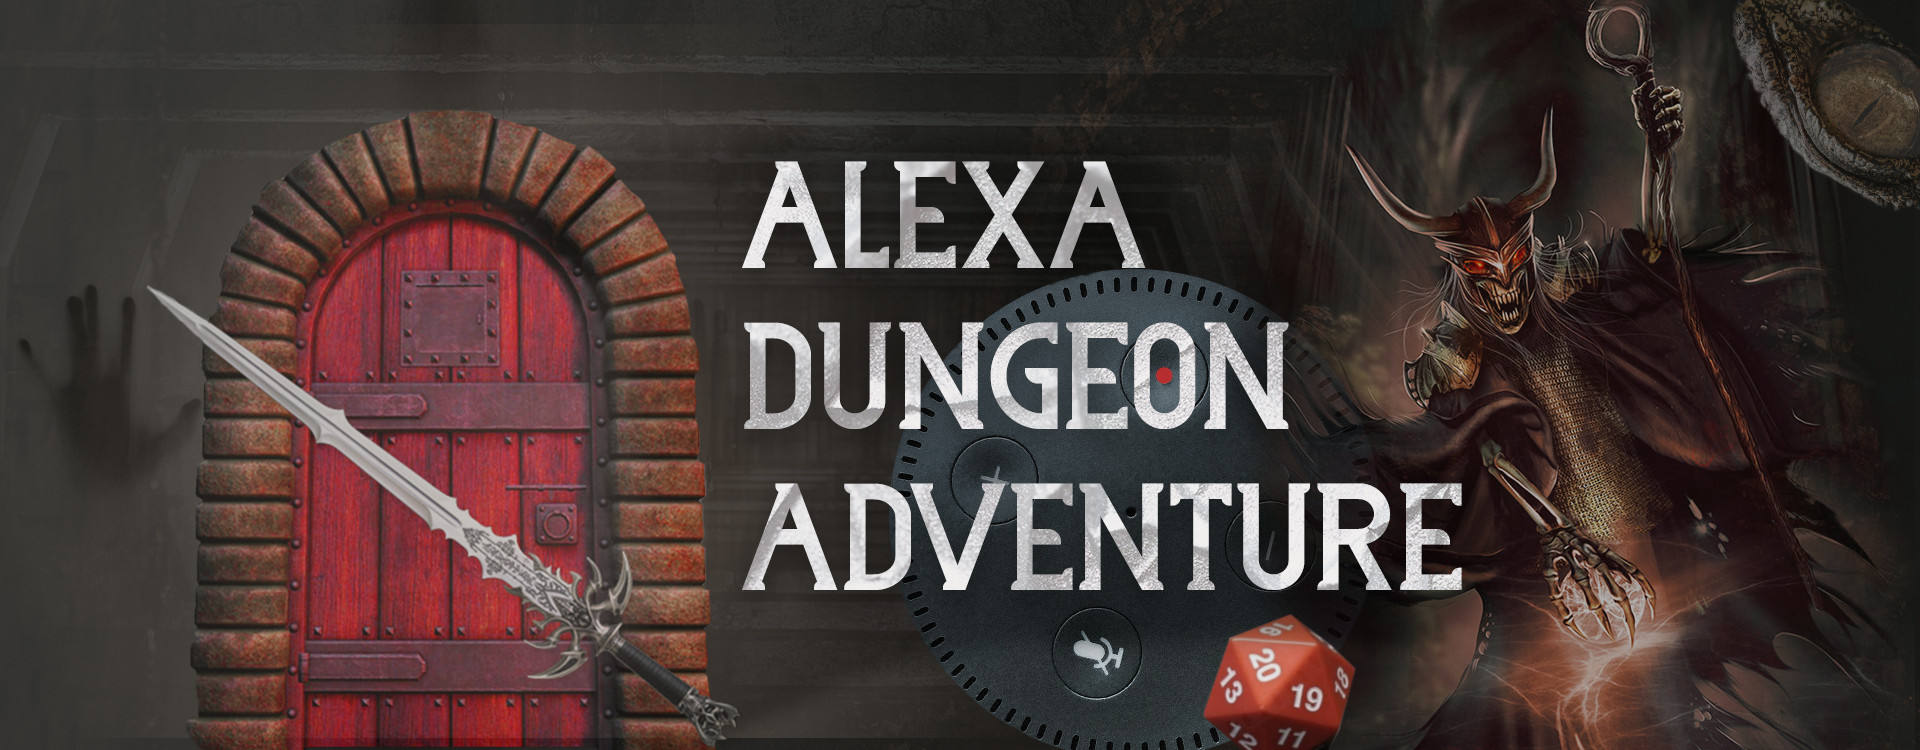 Alexa Dungeon Adventure